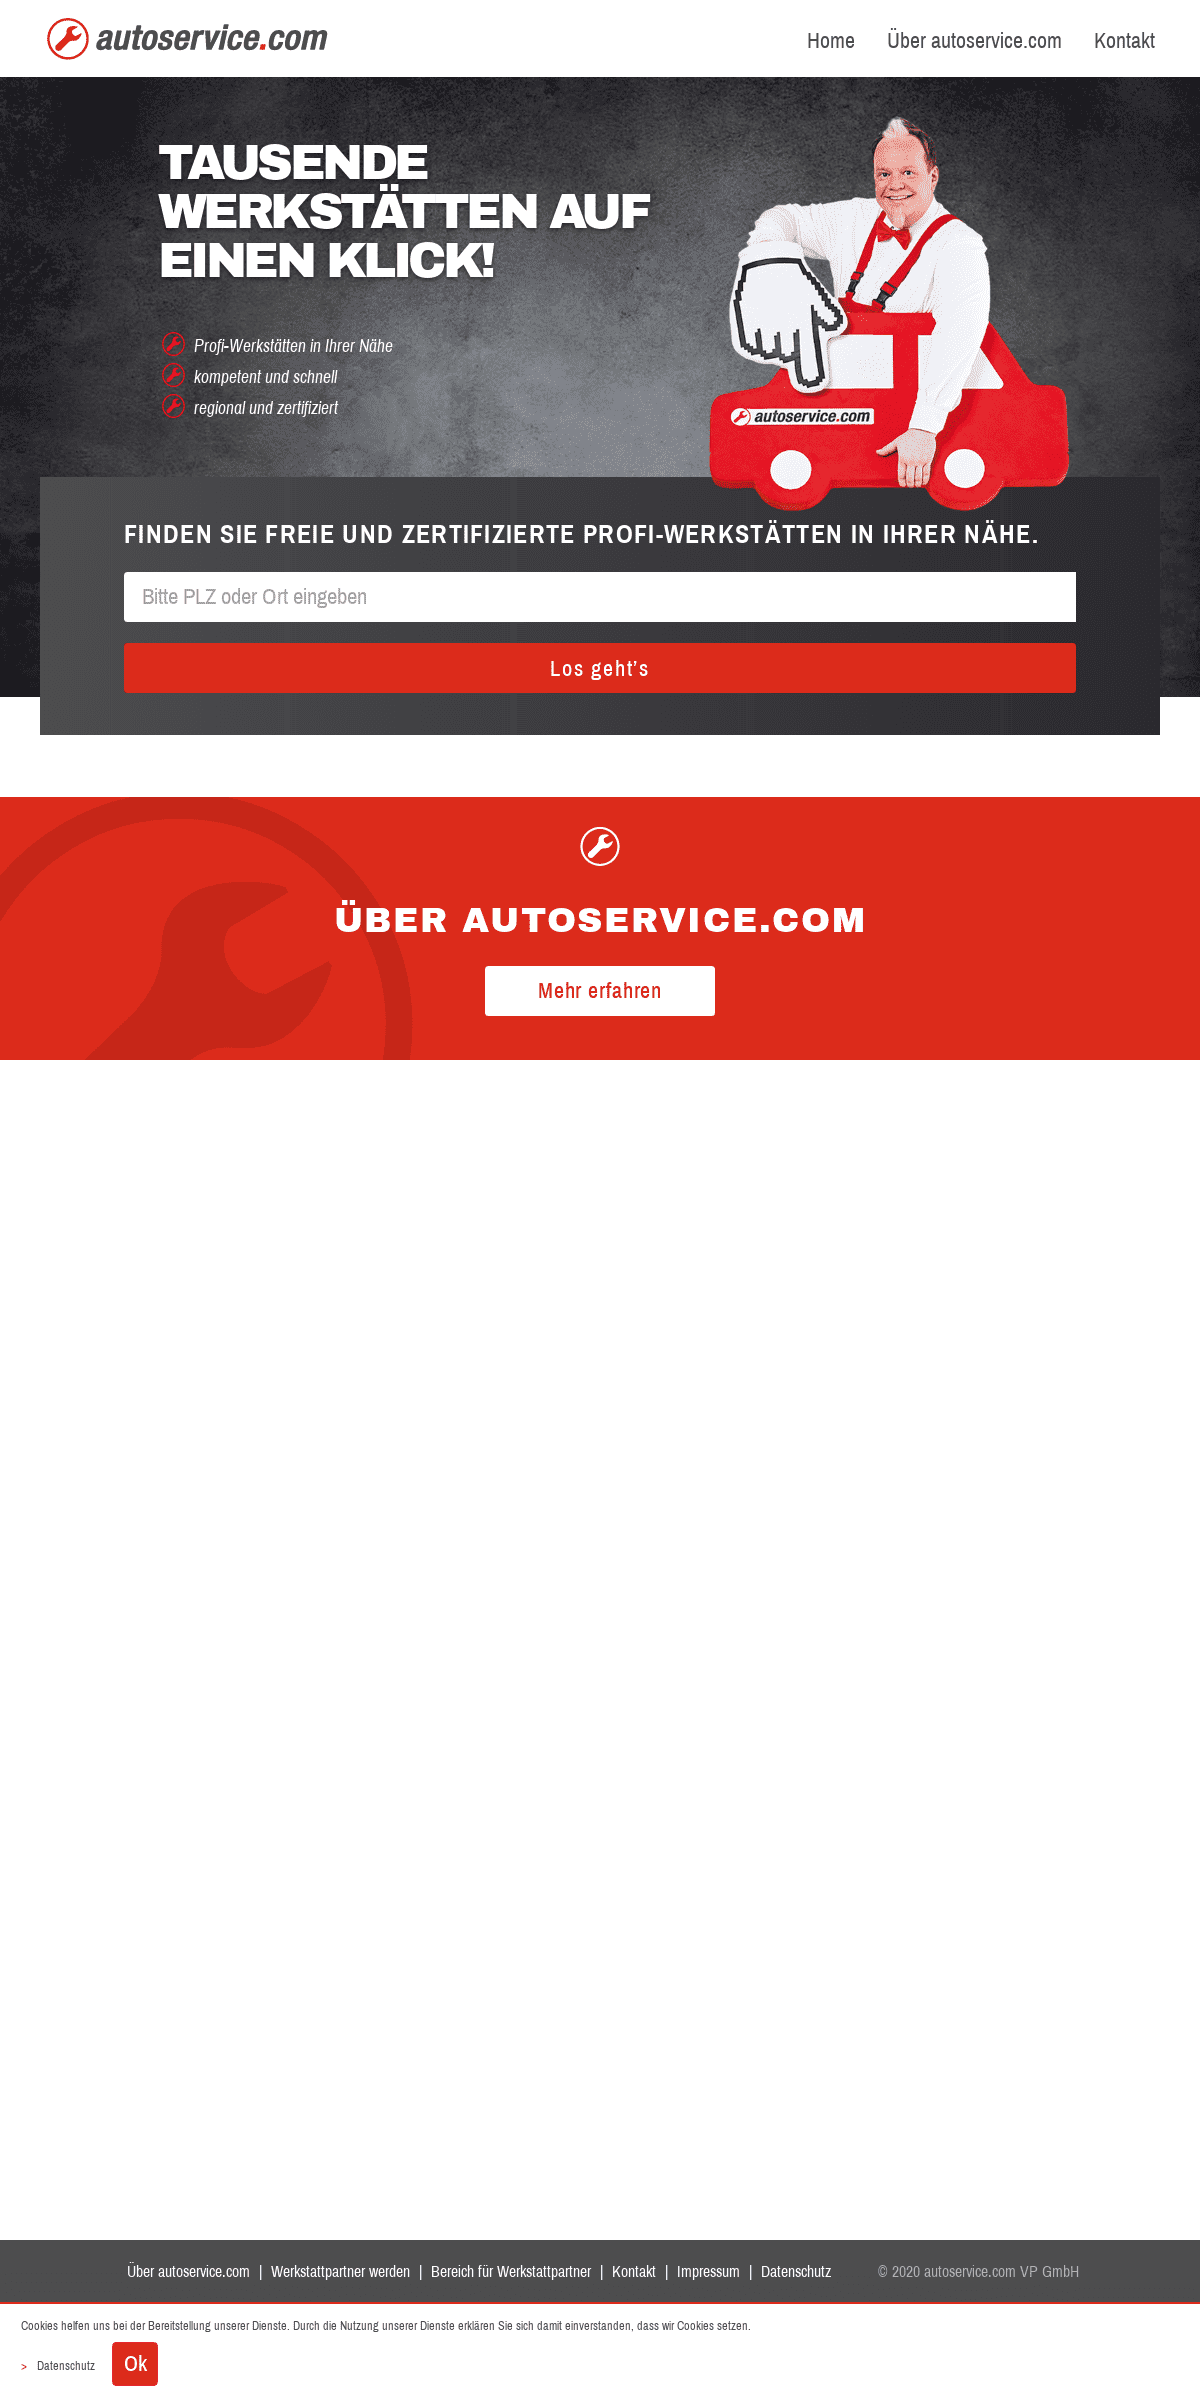 A complete backup of autoservice.com